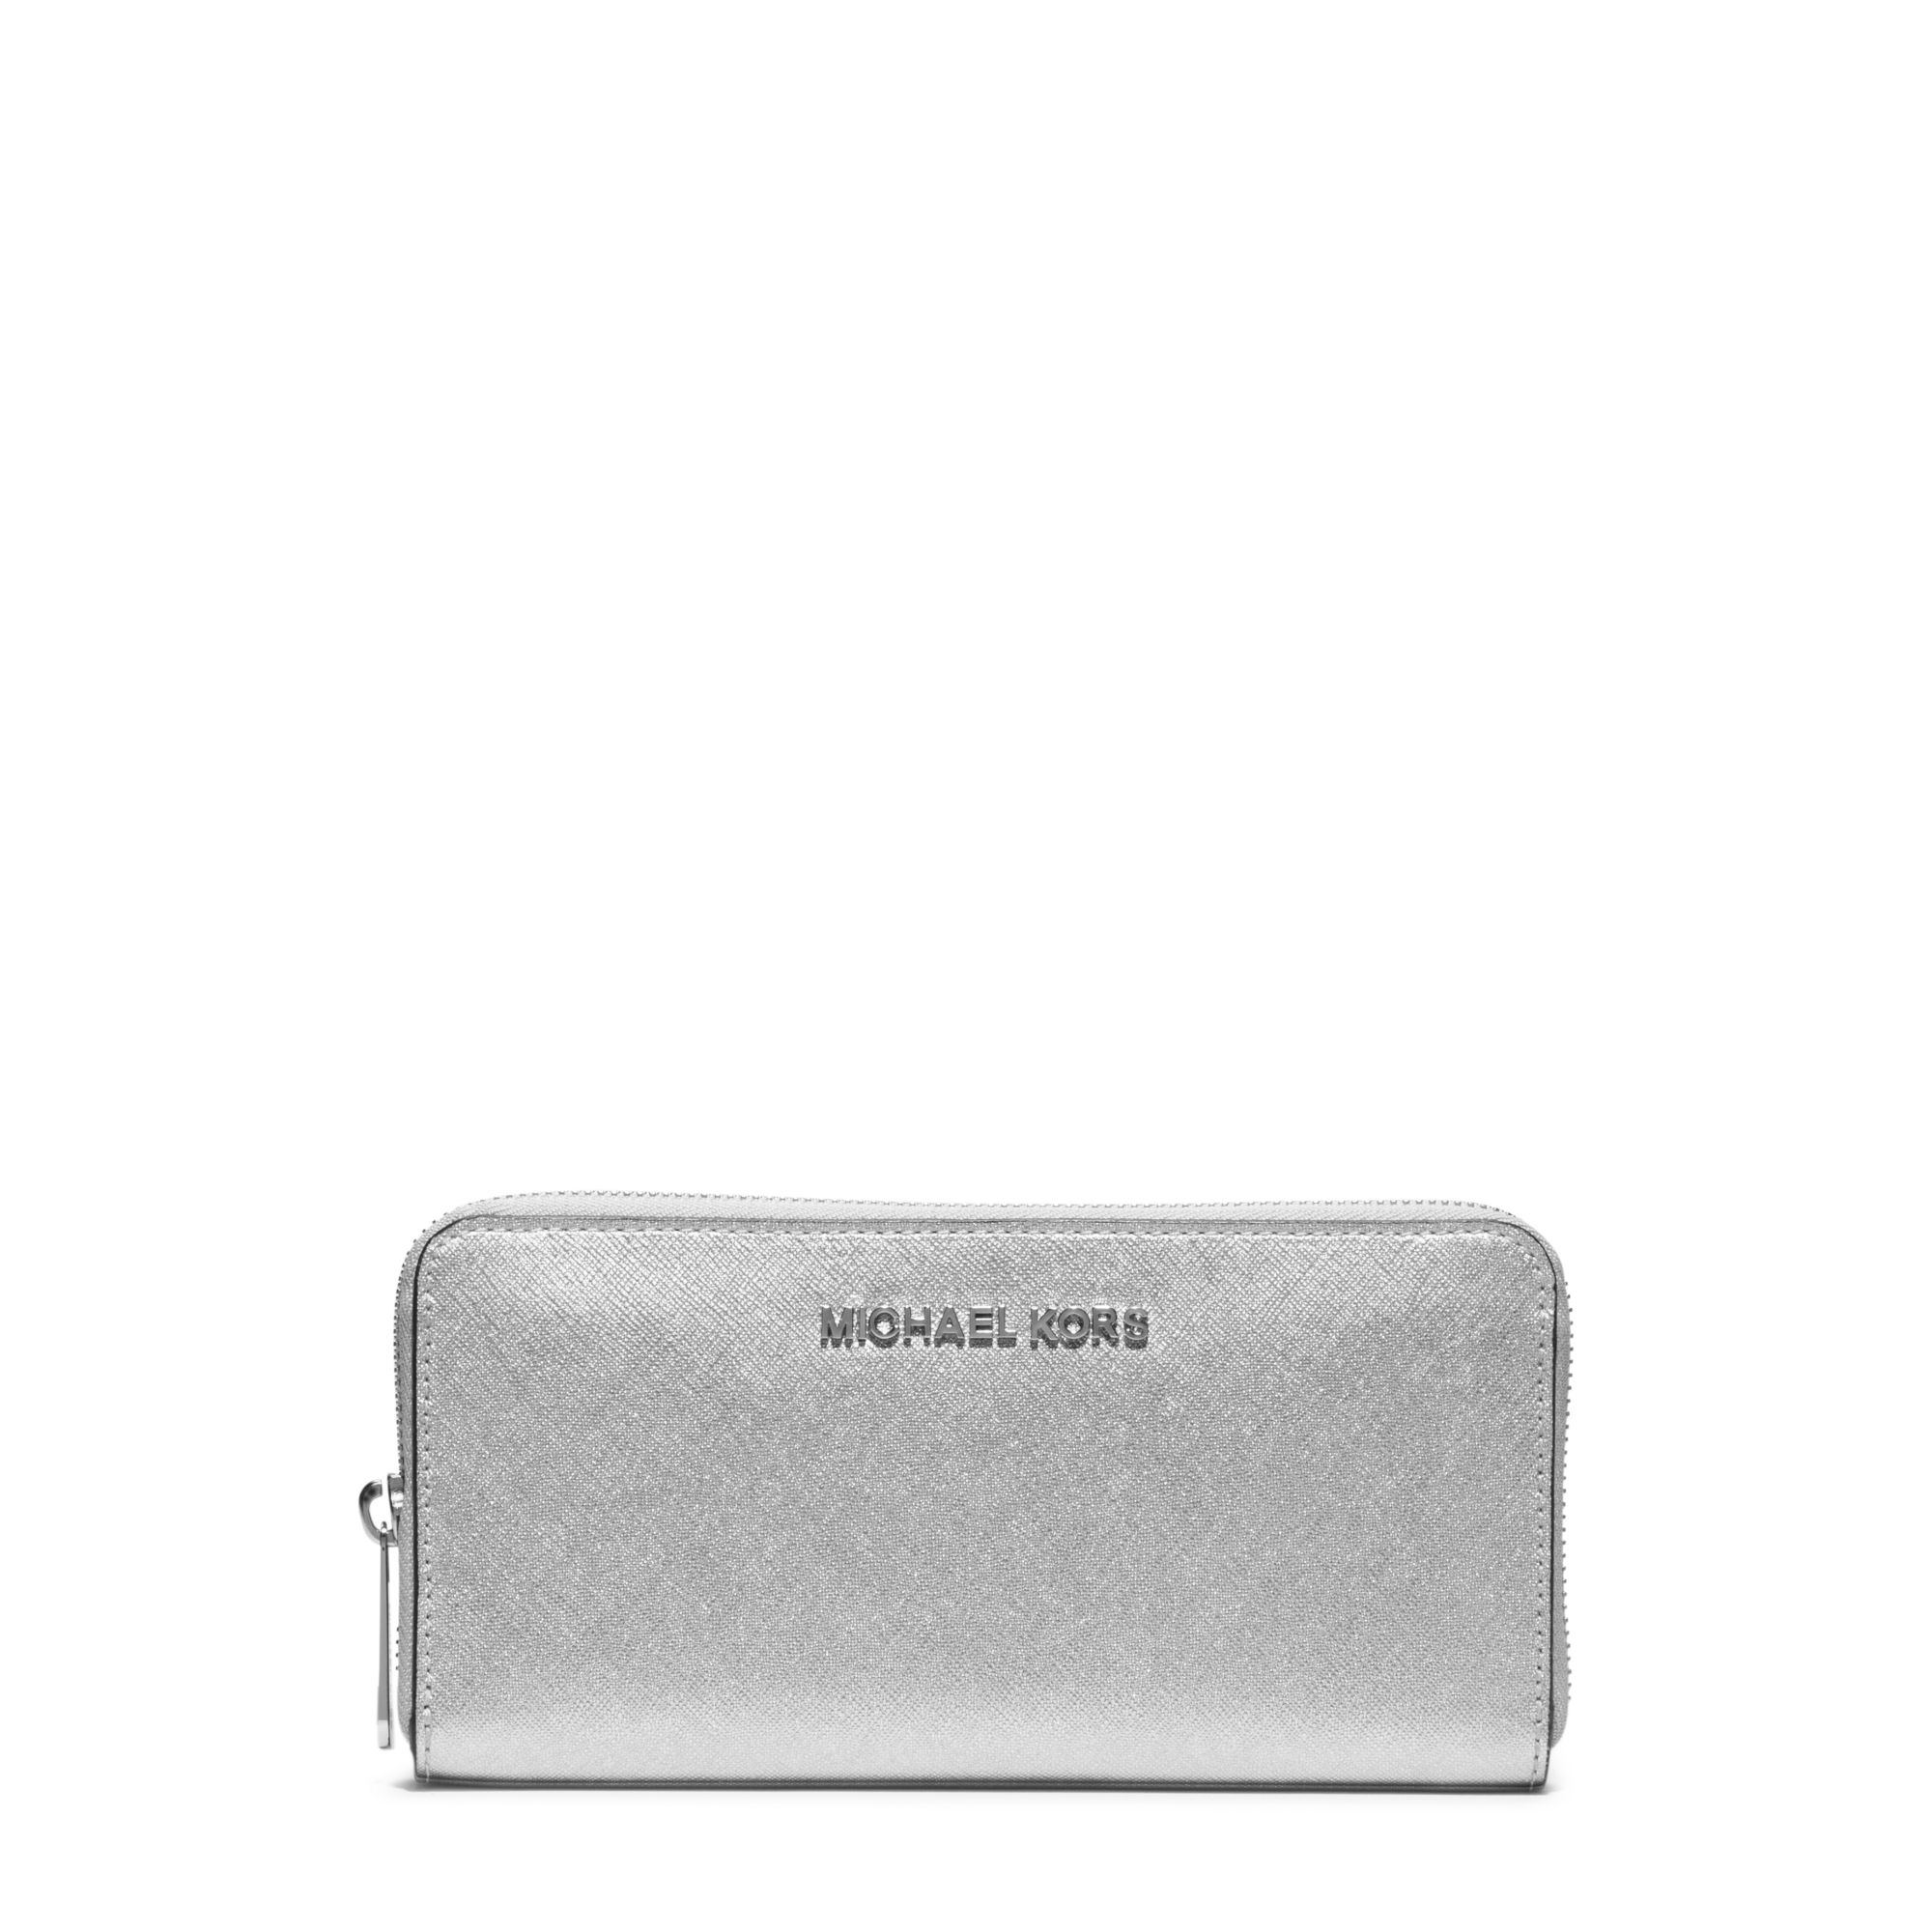 michael kors silver metallic wallet